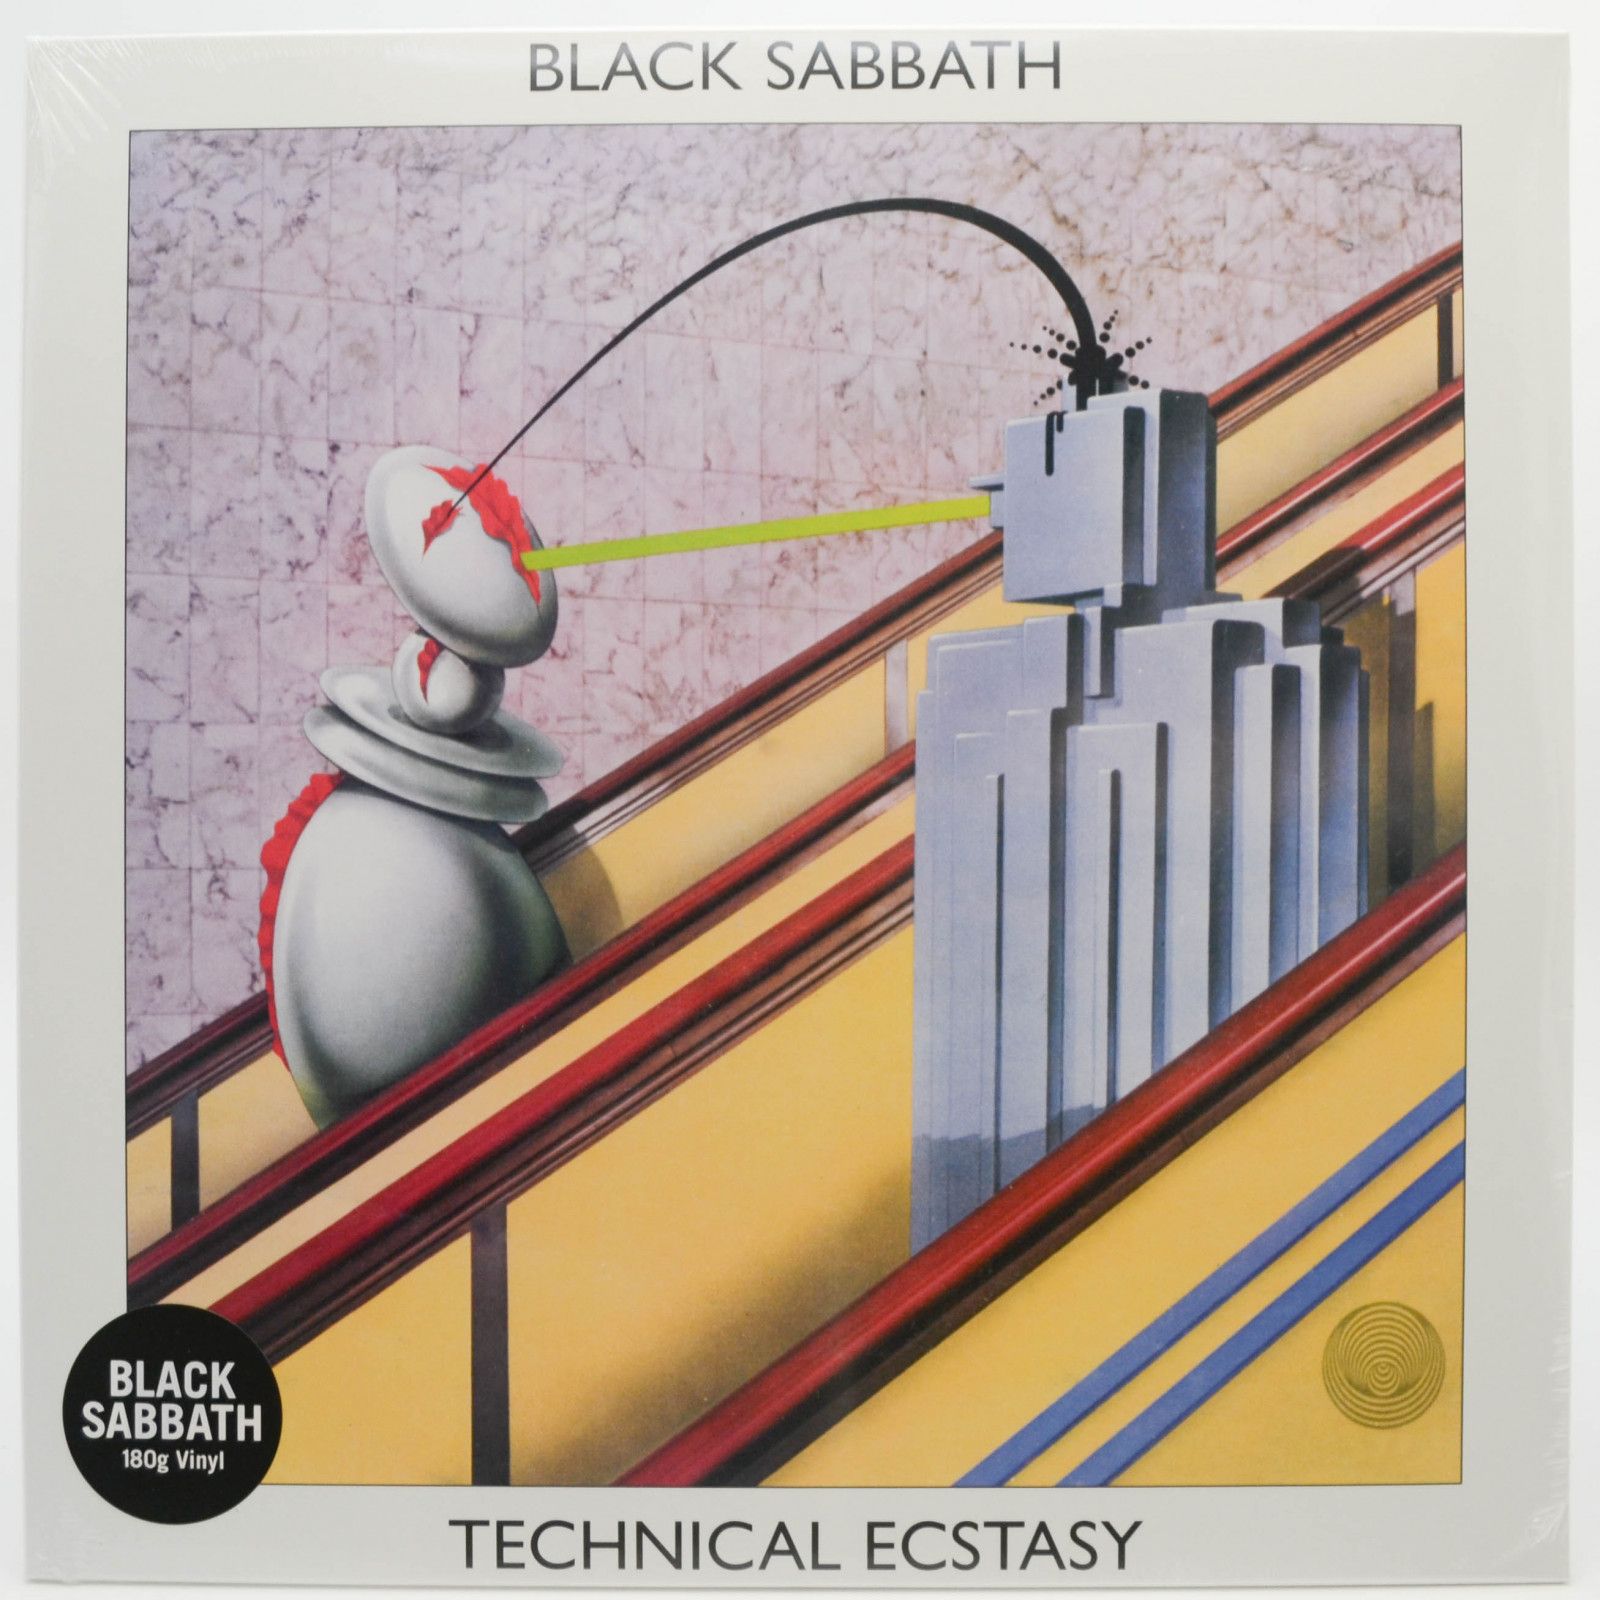 Black Sabbath — Technical Ecstasy, 1976